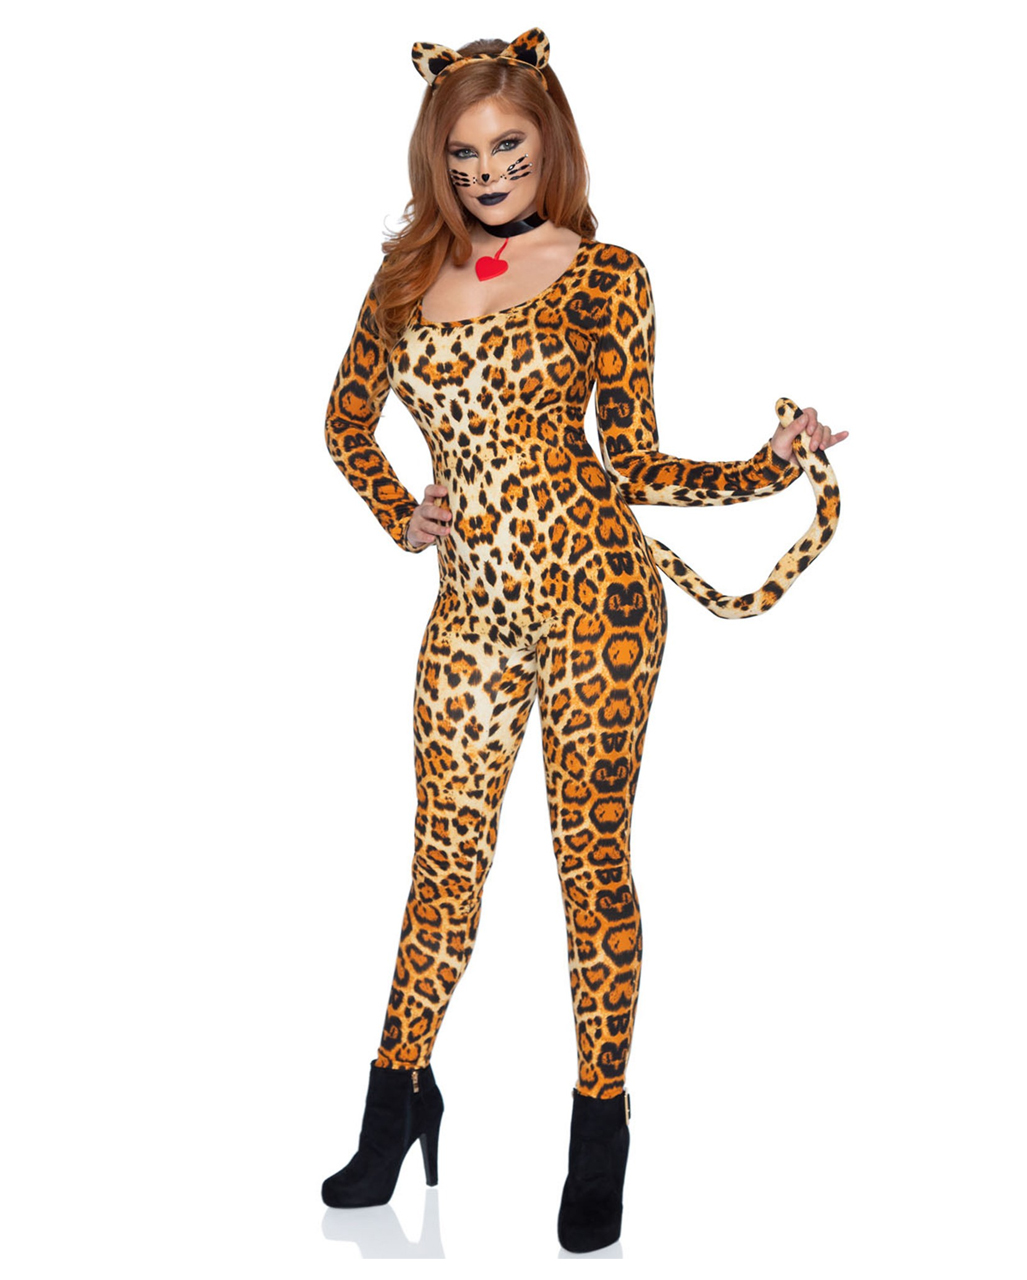 Leopard Jumpsuit Costume for Halloween